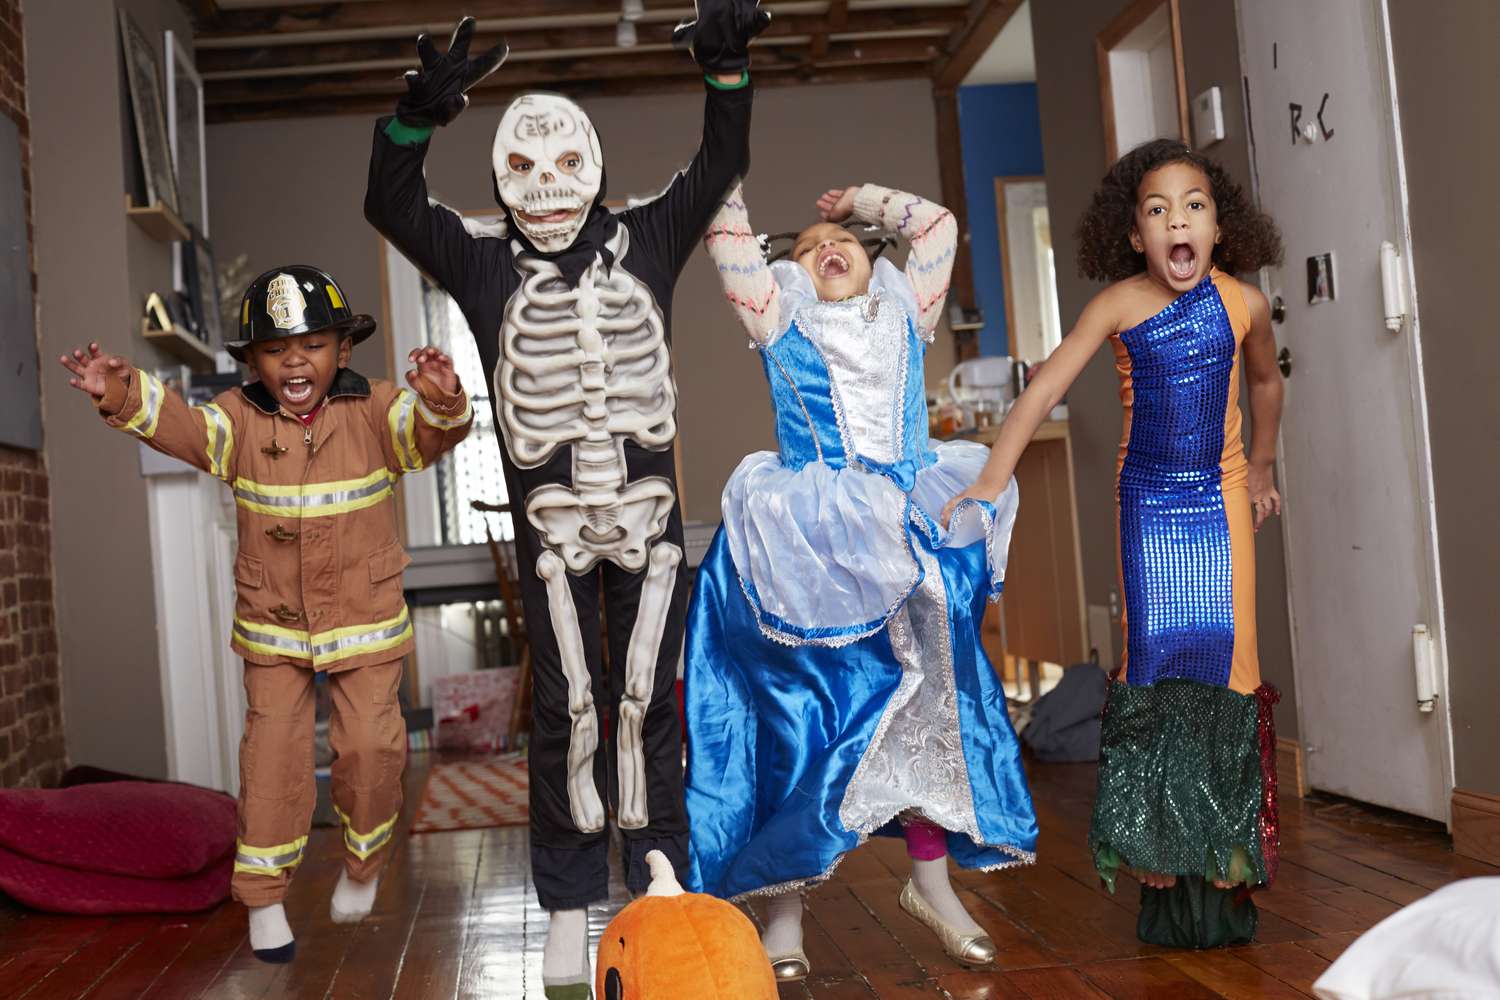 Kinder in Halloween-Kostümen springen vor Freude